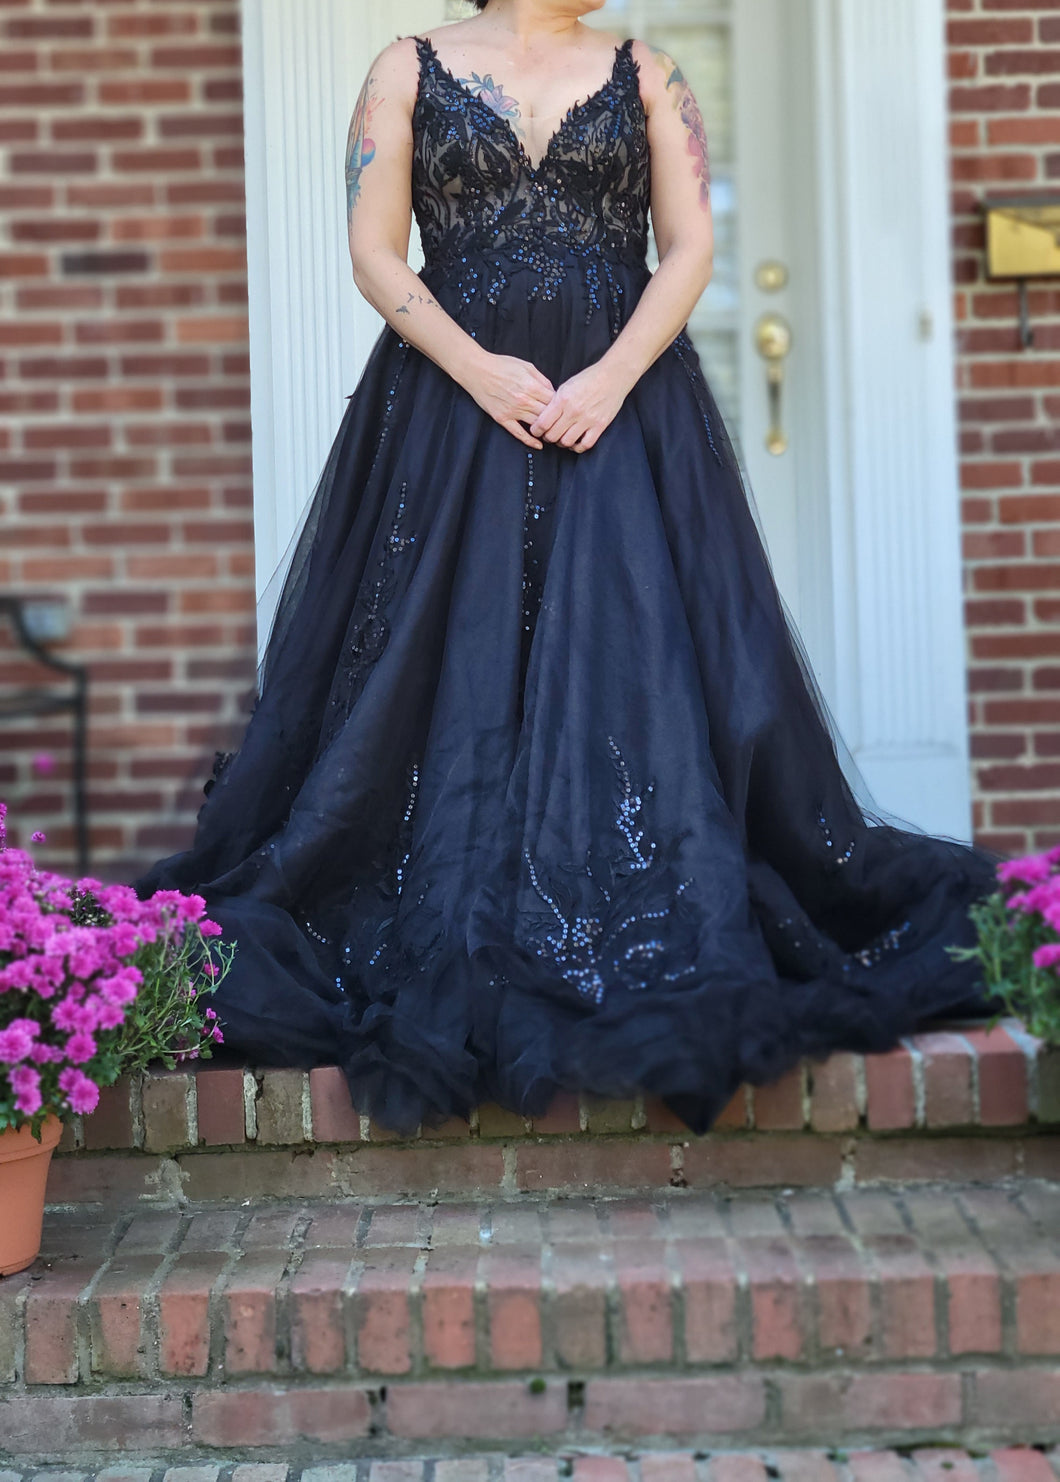 Brides & Tailor 'Black Lace Ball Gown Wedding Dress'